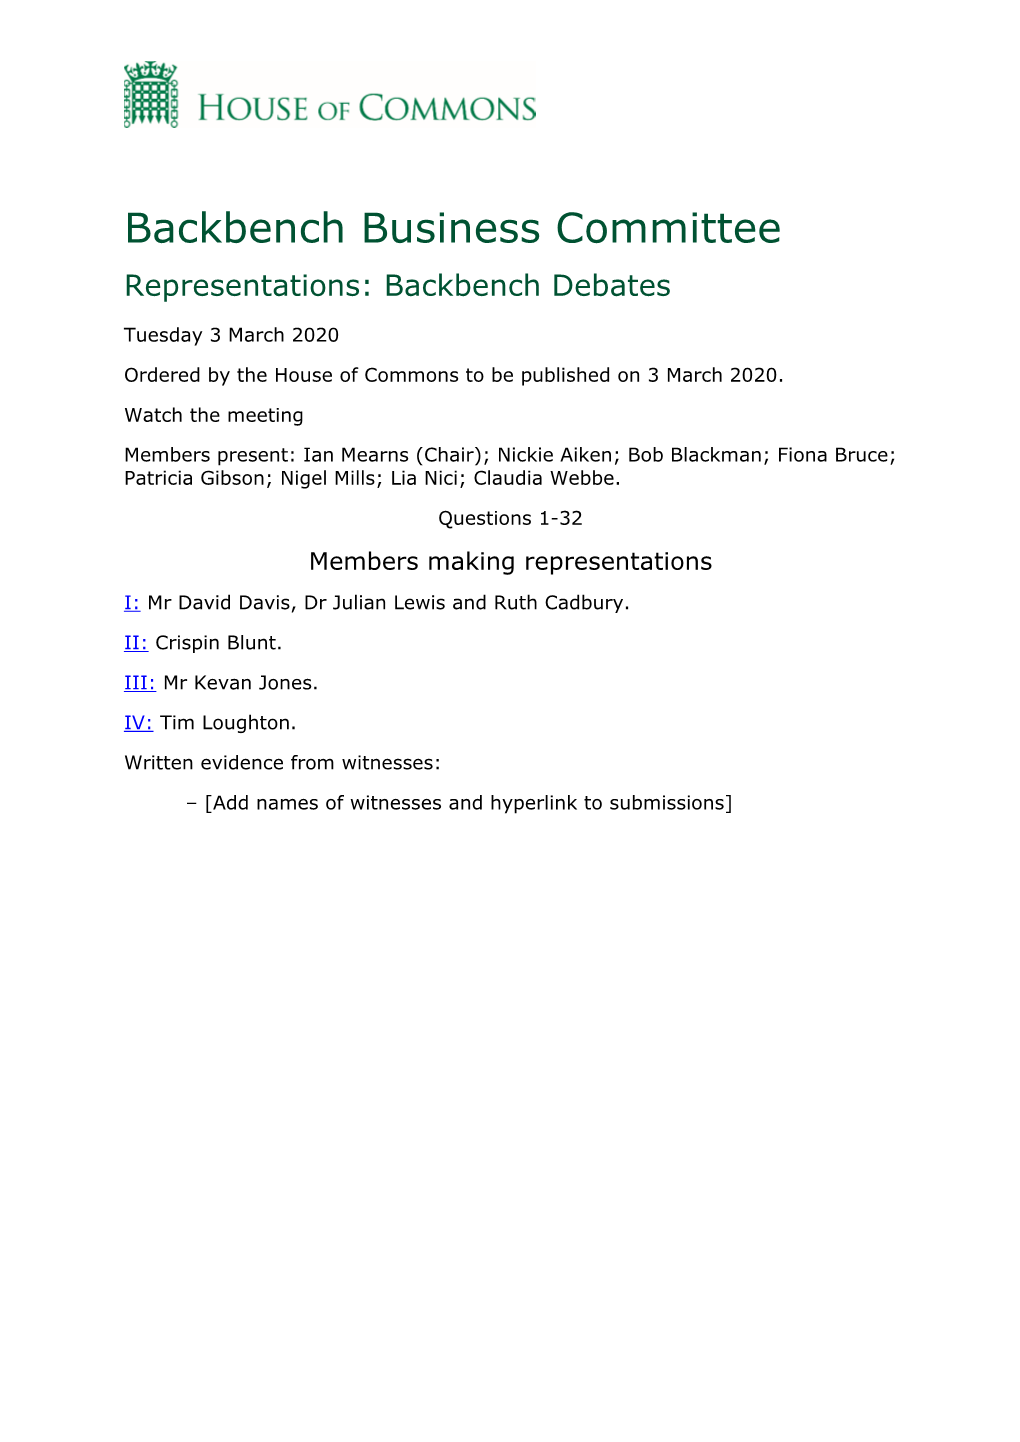 Backbench Business Committee Representations: Backbench Debates